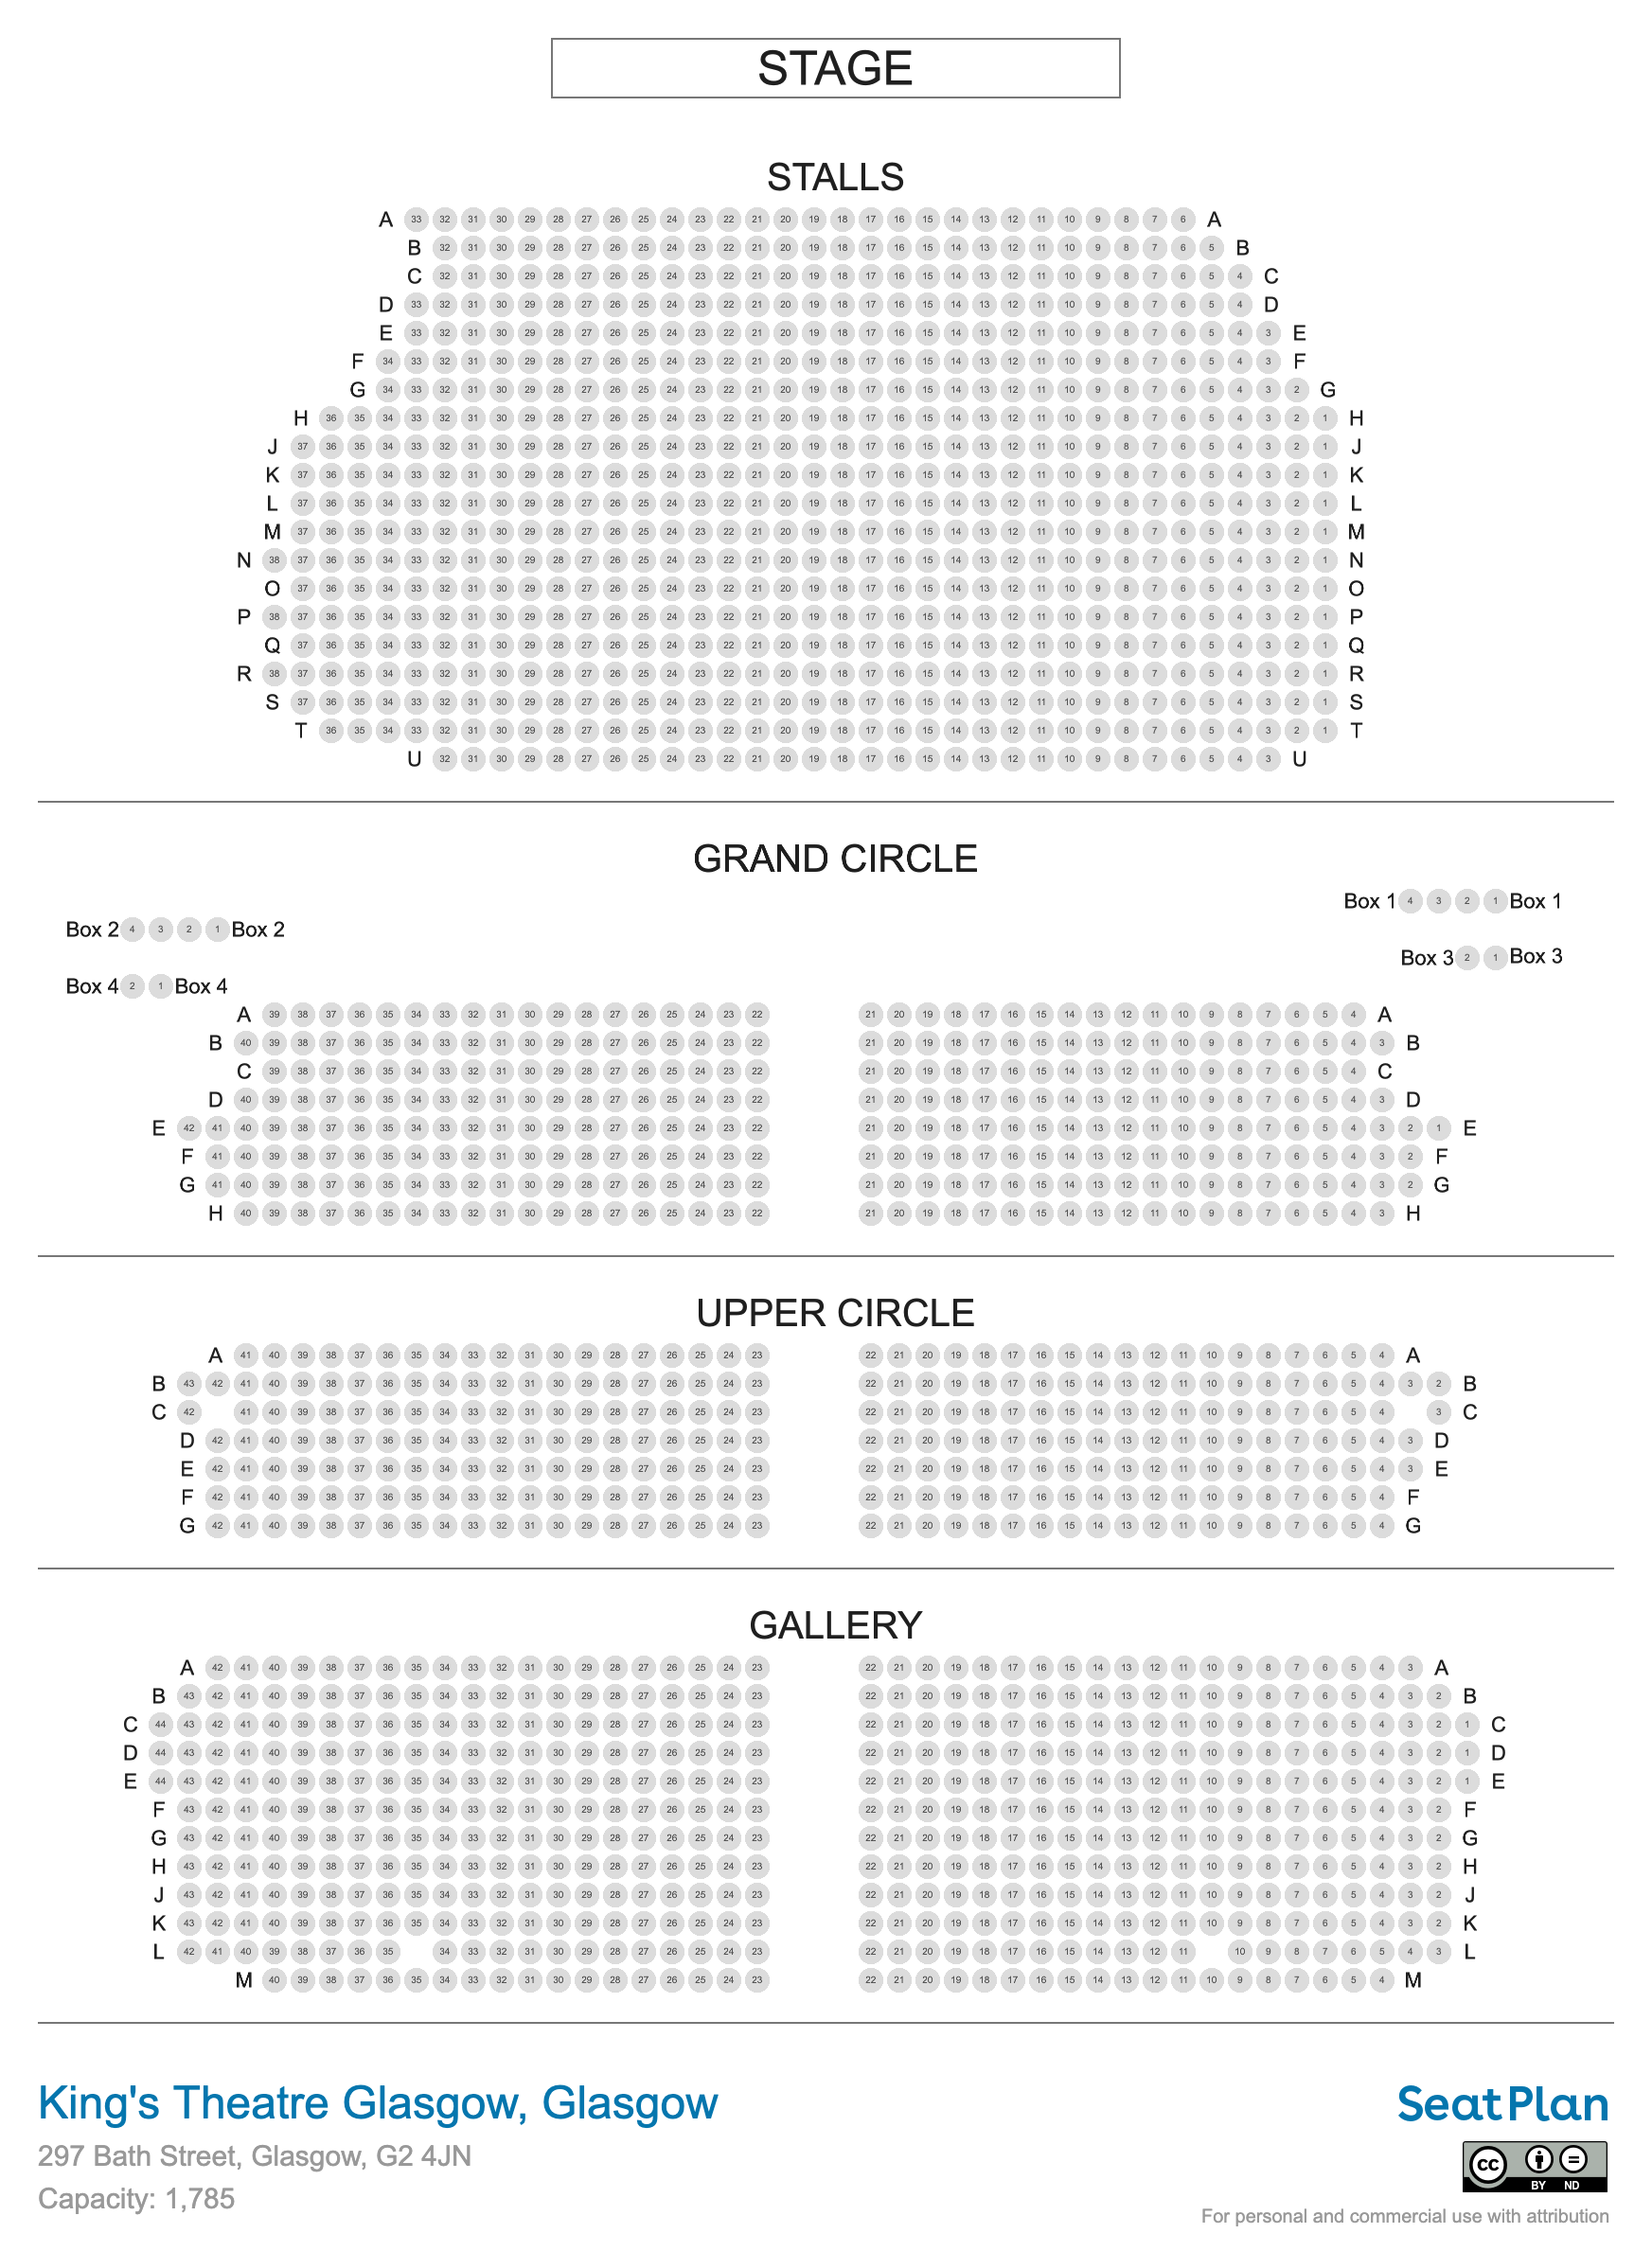 seating plan kings theatre glasgow